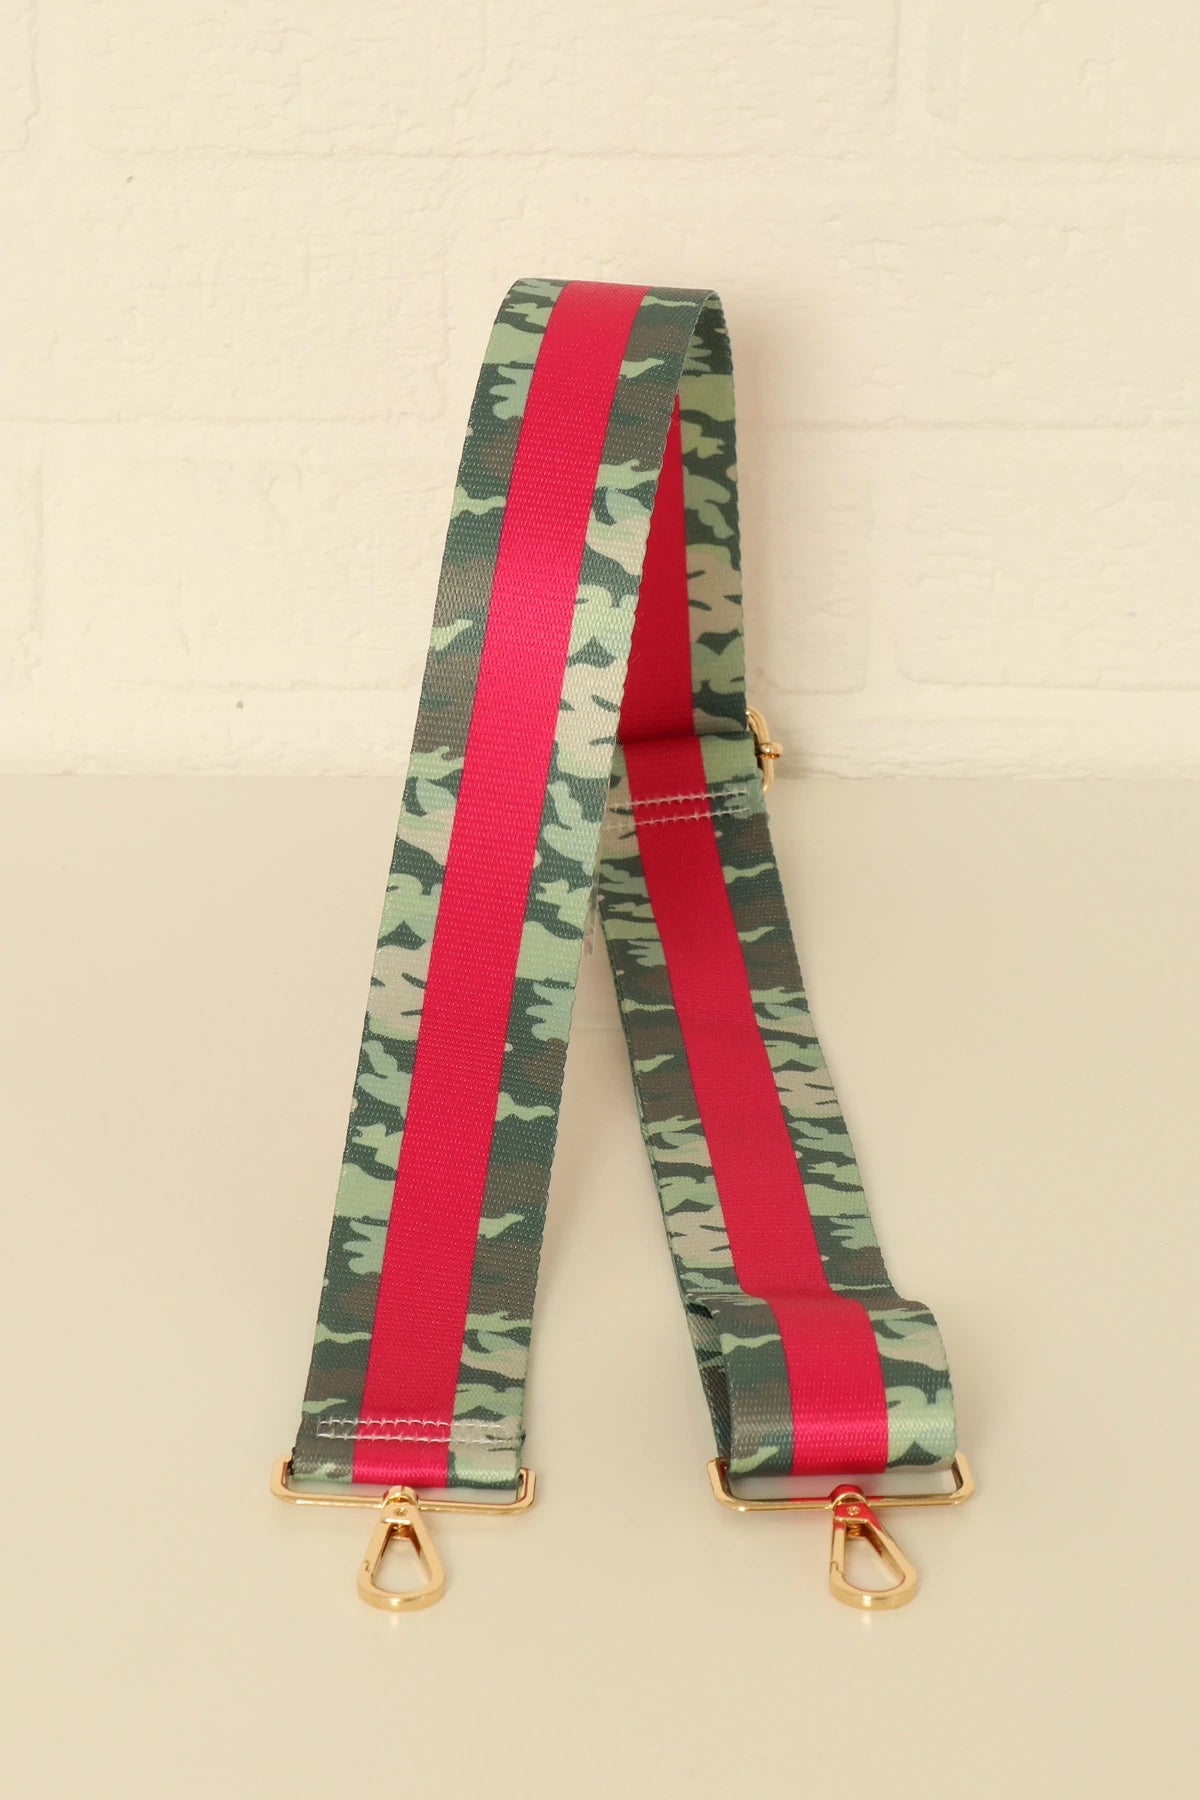 Fully Adjustable Crossbody Bag Strap In Khaki Fuchsia Colour Stripe Camouflage